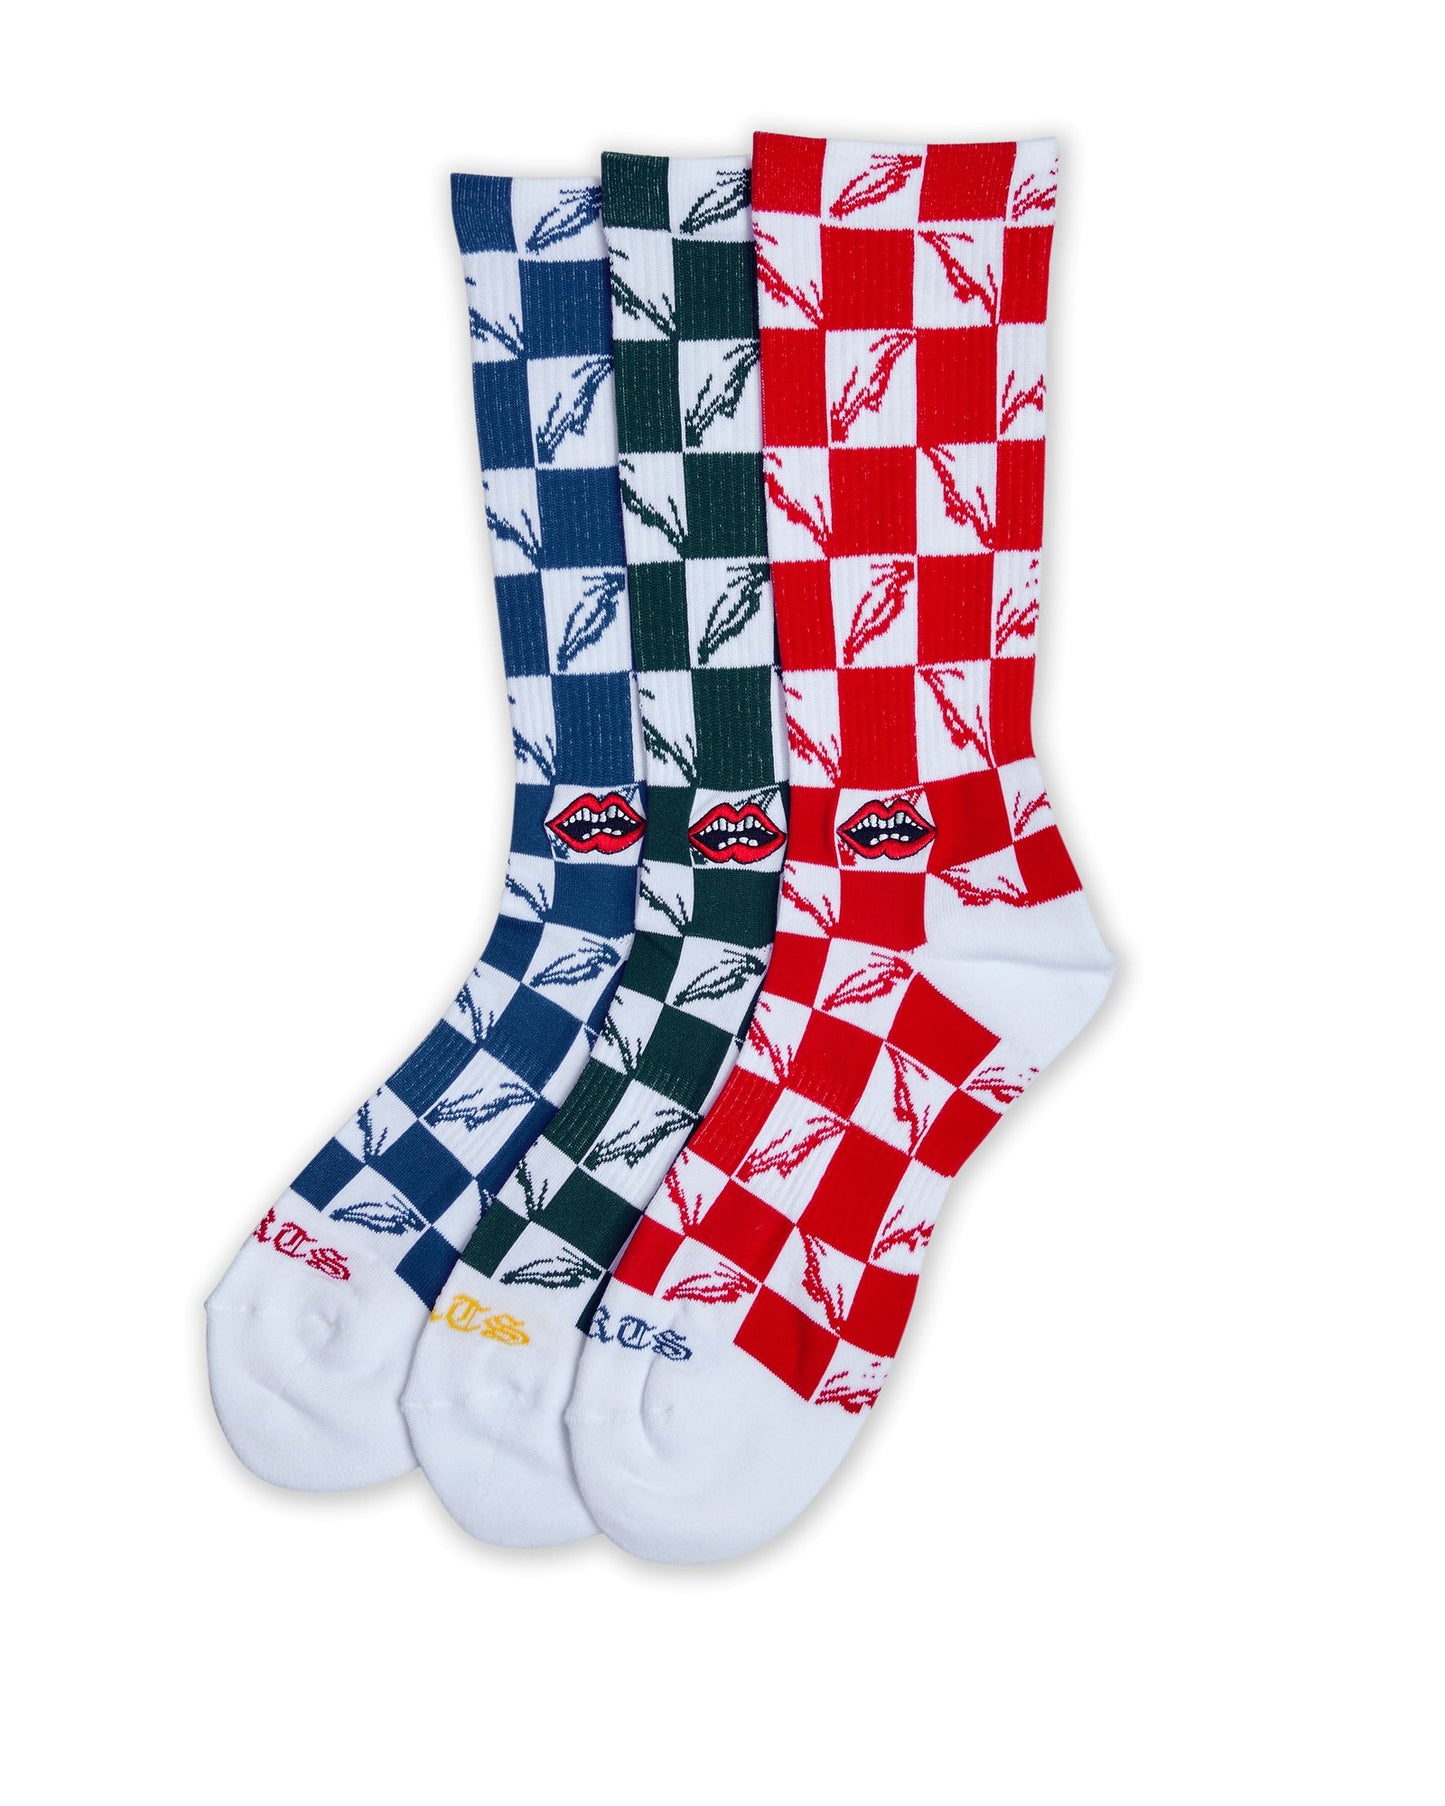 Chrome Hearts 3 Pack 99 Eyes Socks - Paroissesaintefoy Sneakers Sale Online